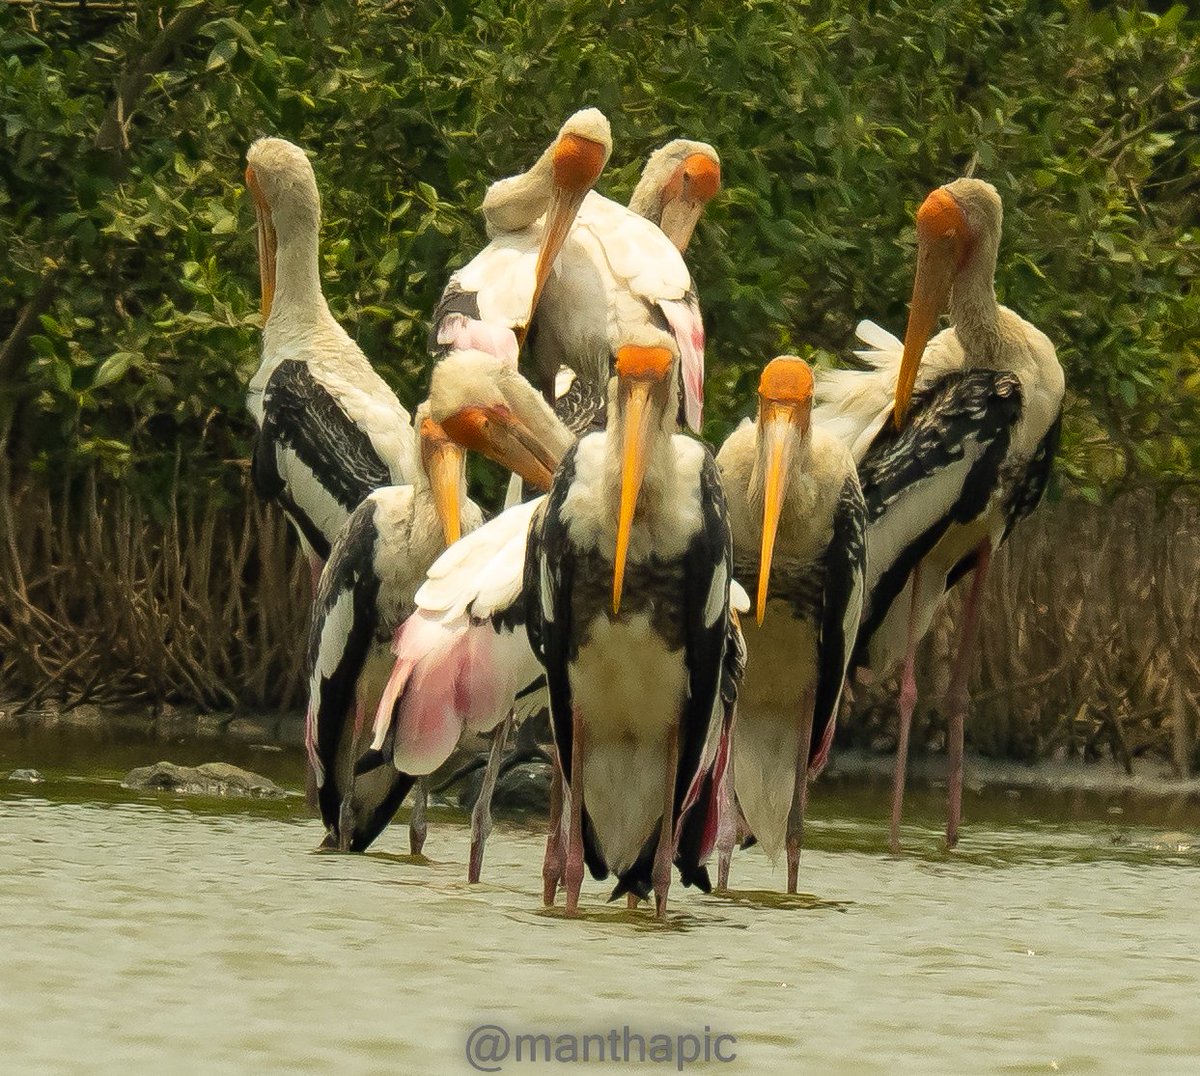 what do you call a group of Strock's ??? ( index😬😬😬😬😬😬) The khap deciding the next move....
#IndiAves #birdsaroundme #waytowild #birds #birdslover #birdsofindia #BirdTwitter #birdlovers
#natgeoindia #natgeowild